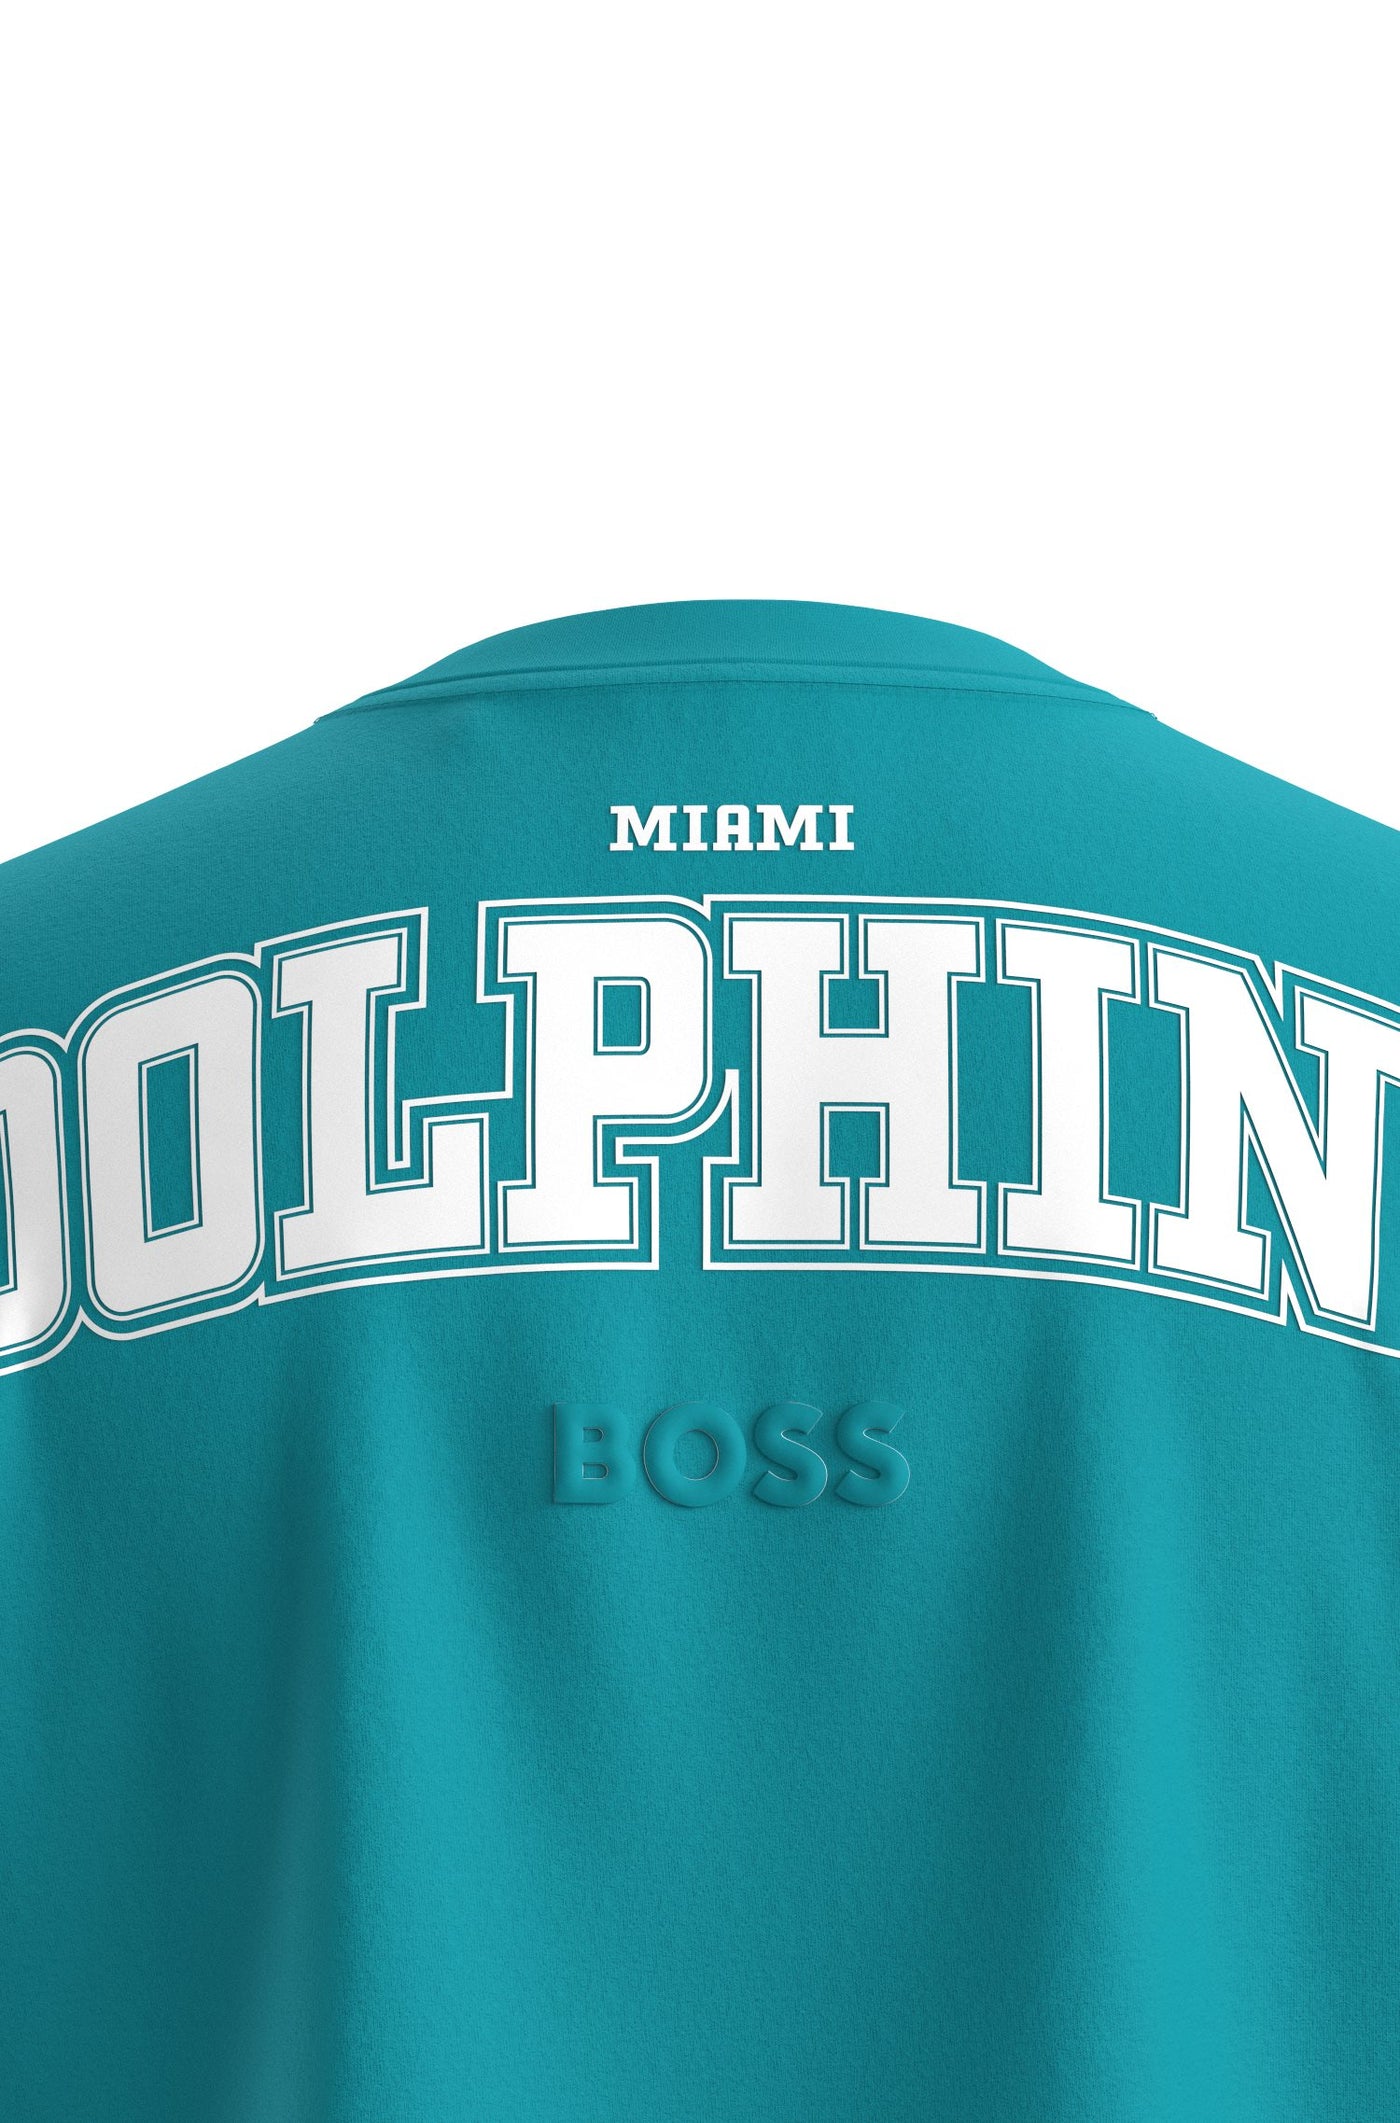 BOSS T Brady NFL T Shirt in Miami Dolphins Print